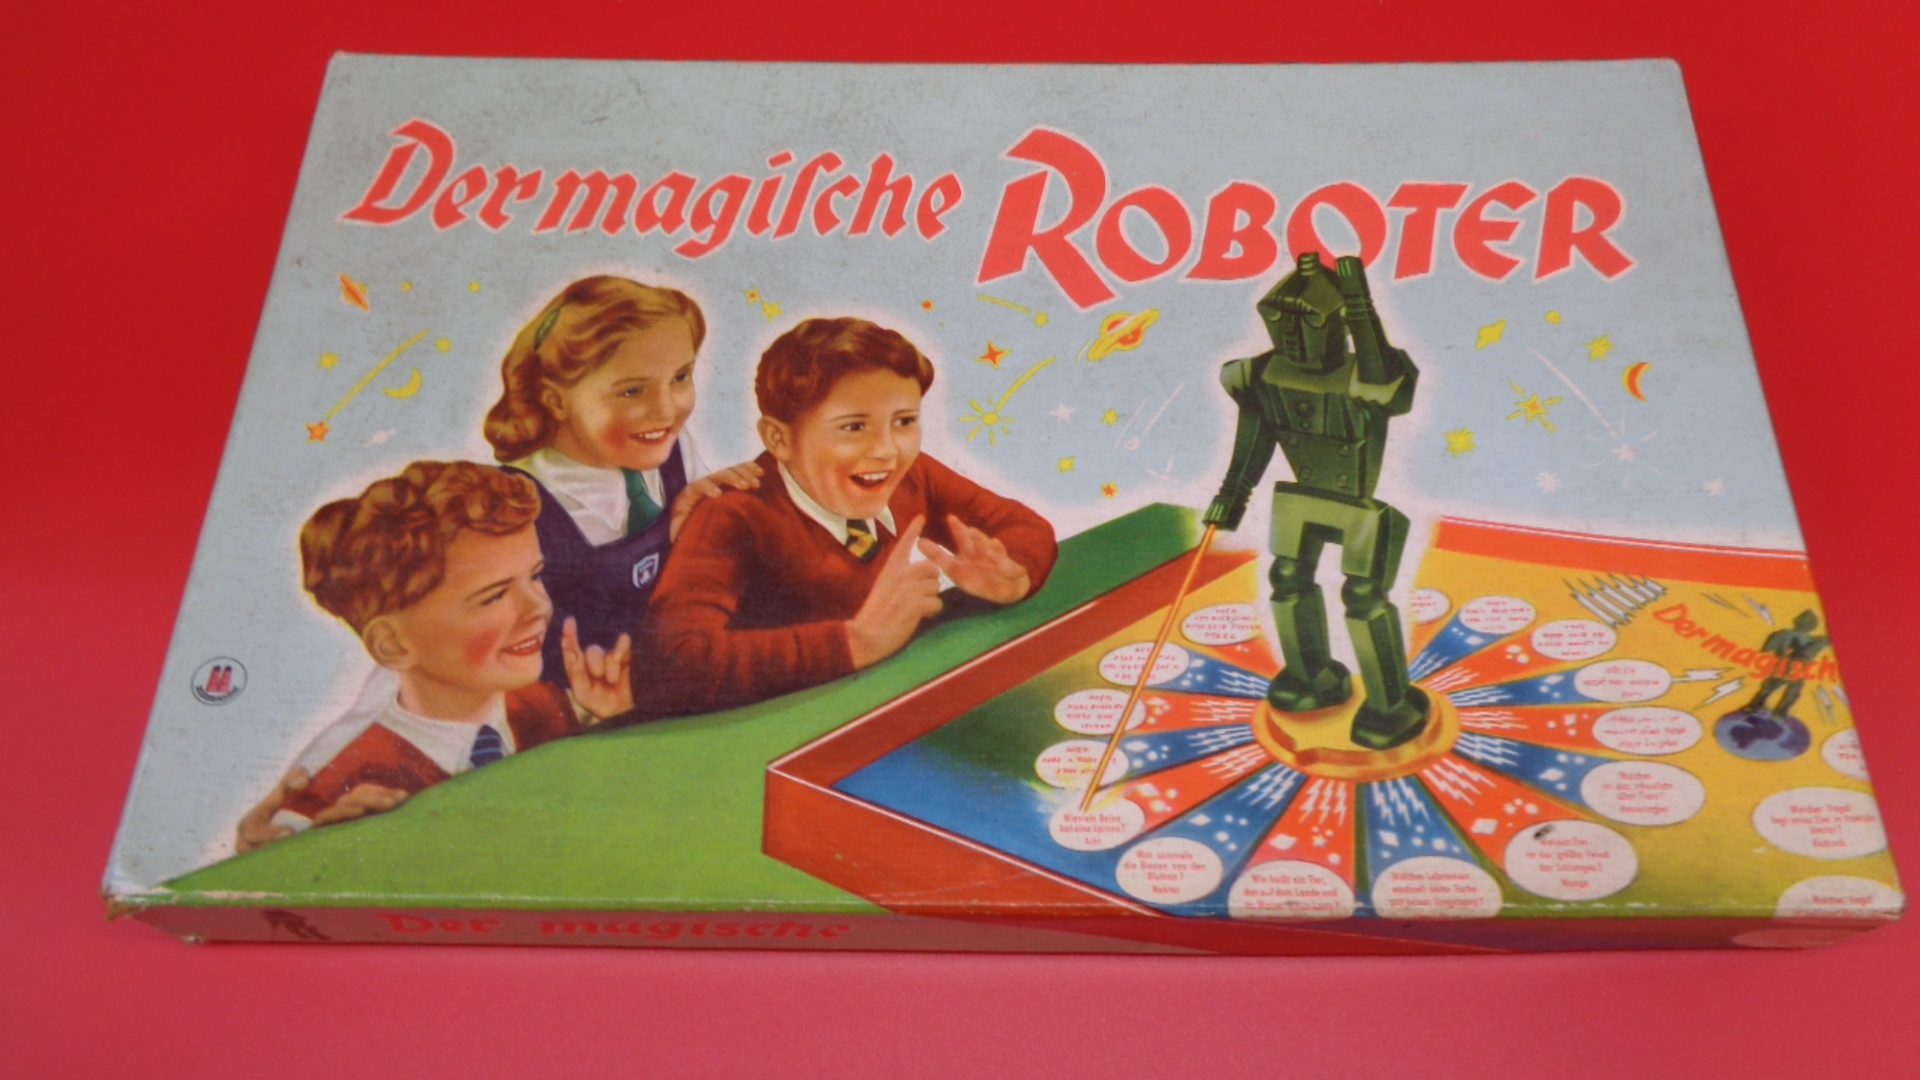 Der Magilche Roboter poster